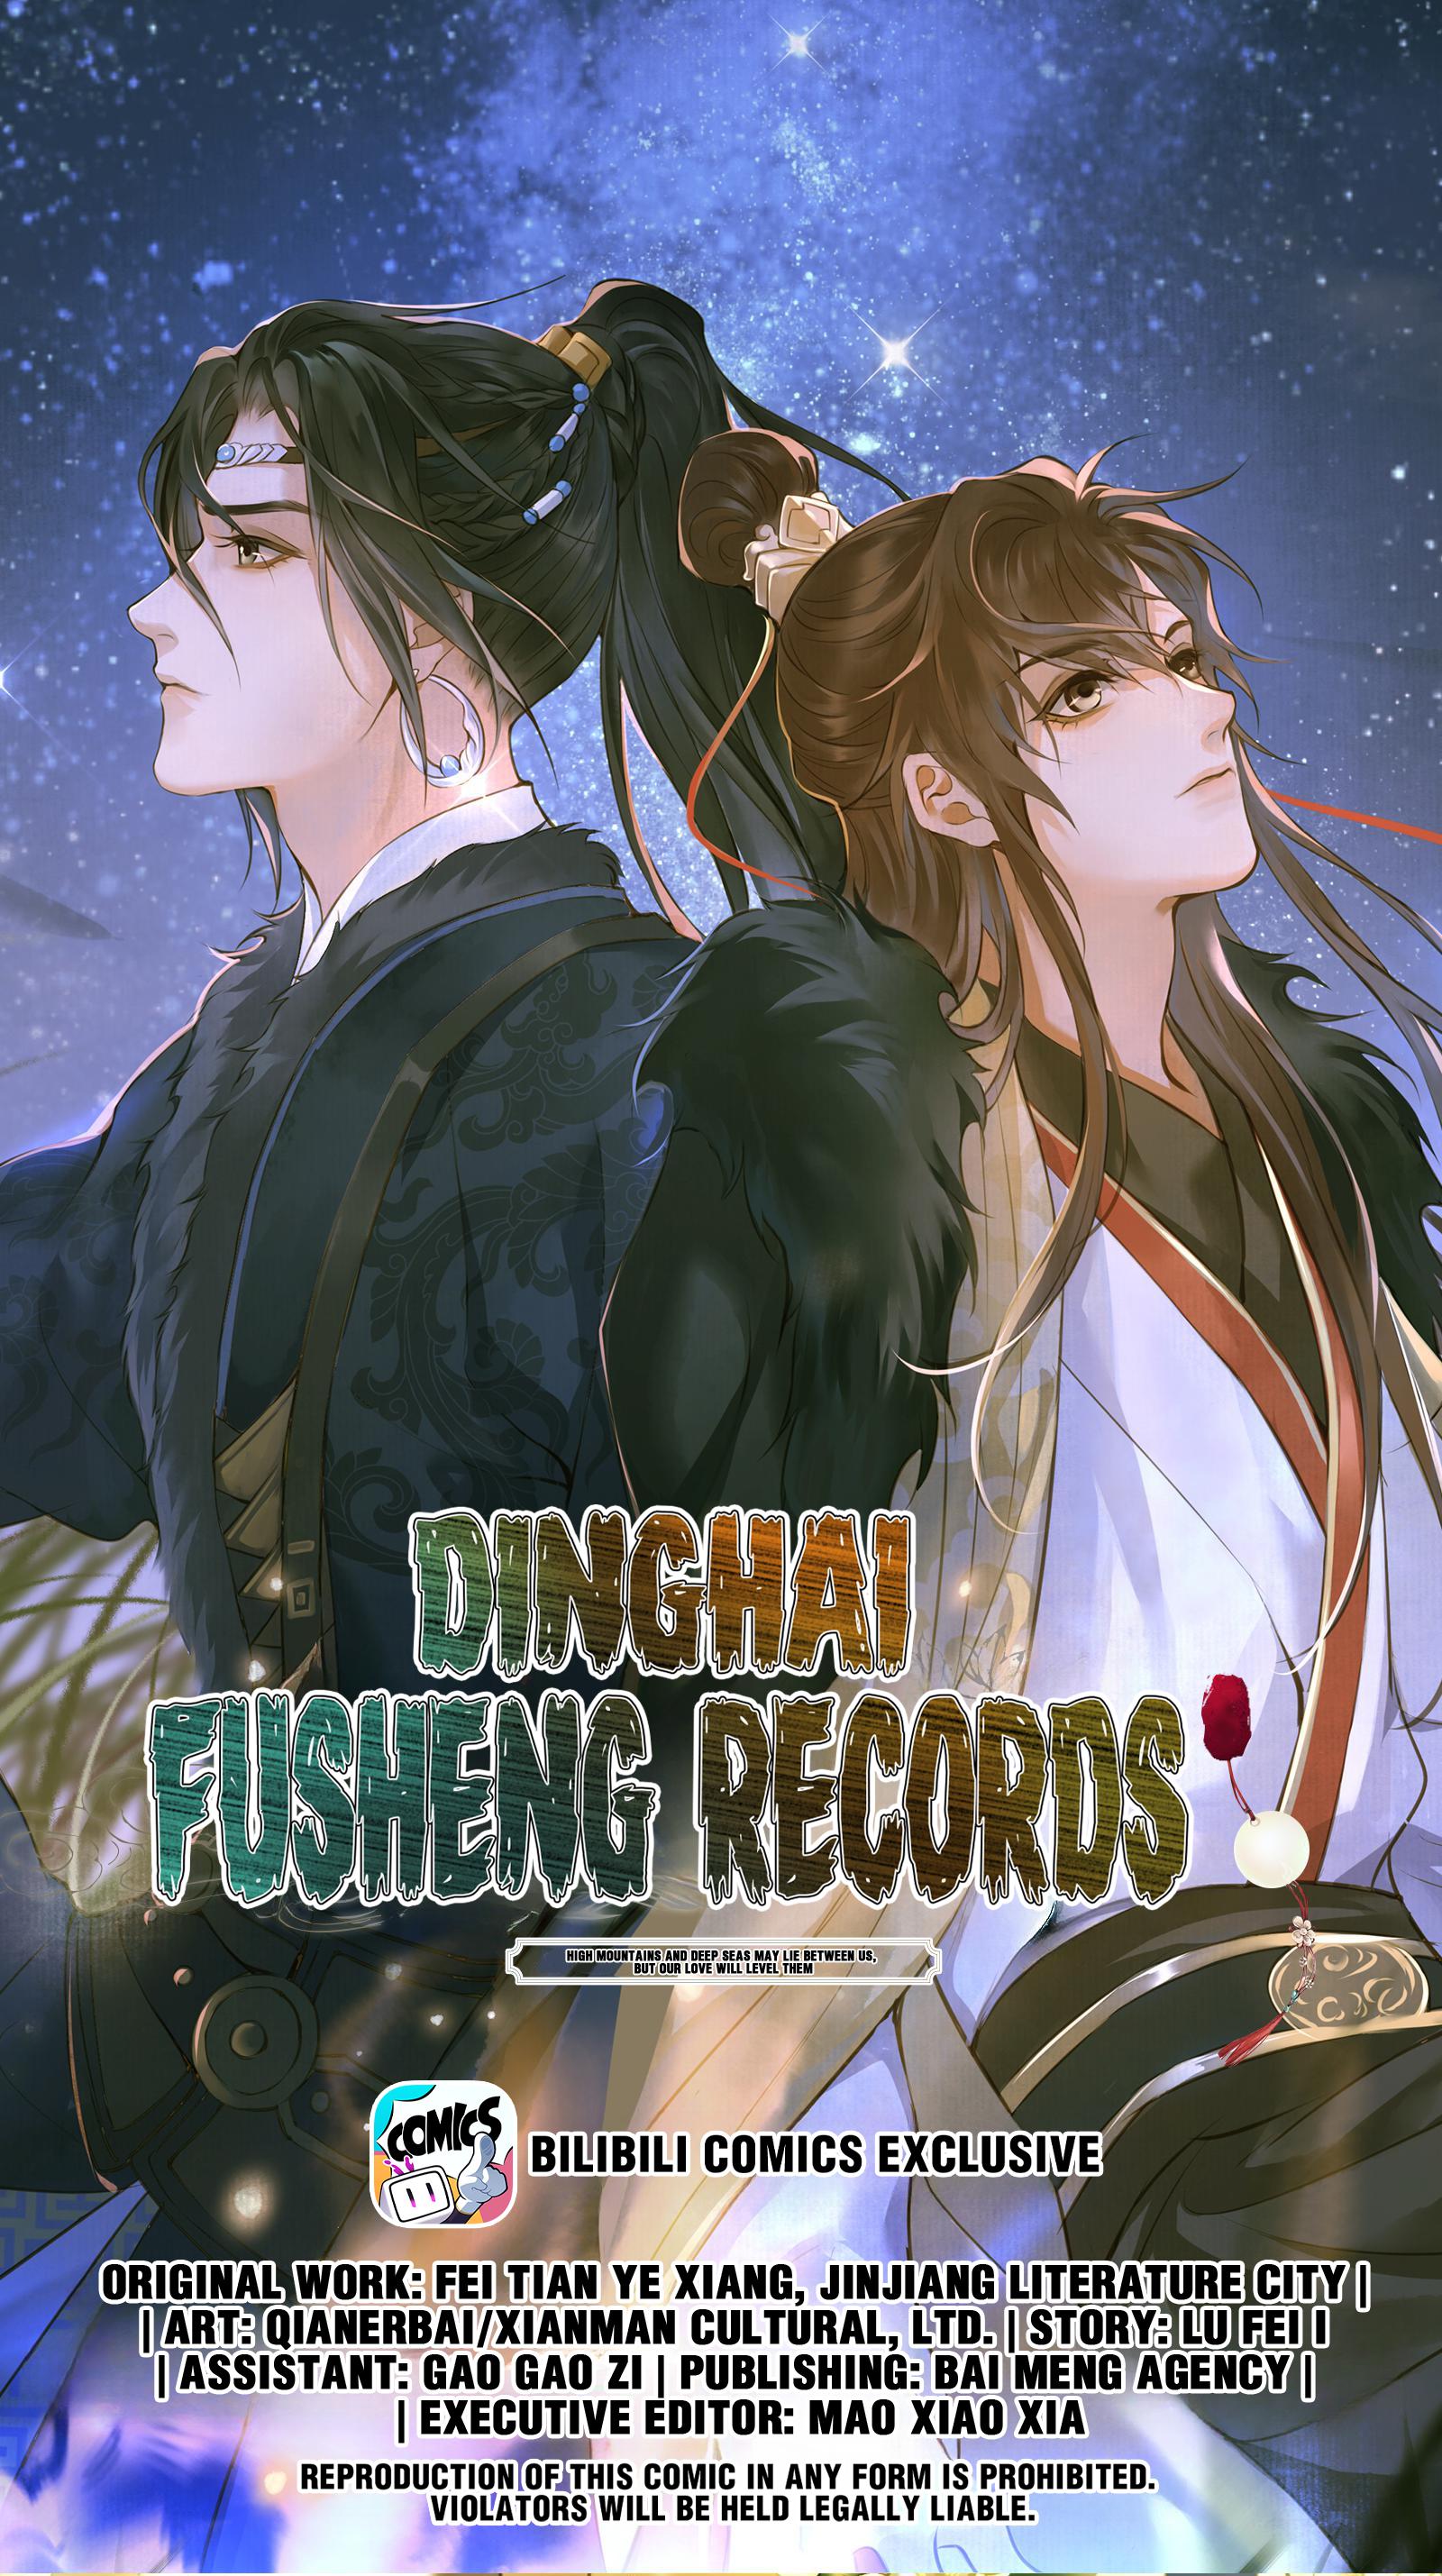 Dinghai Fusheng Records - Page 1